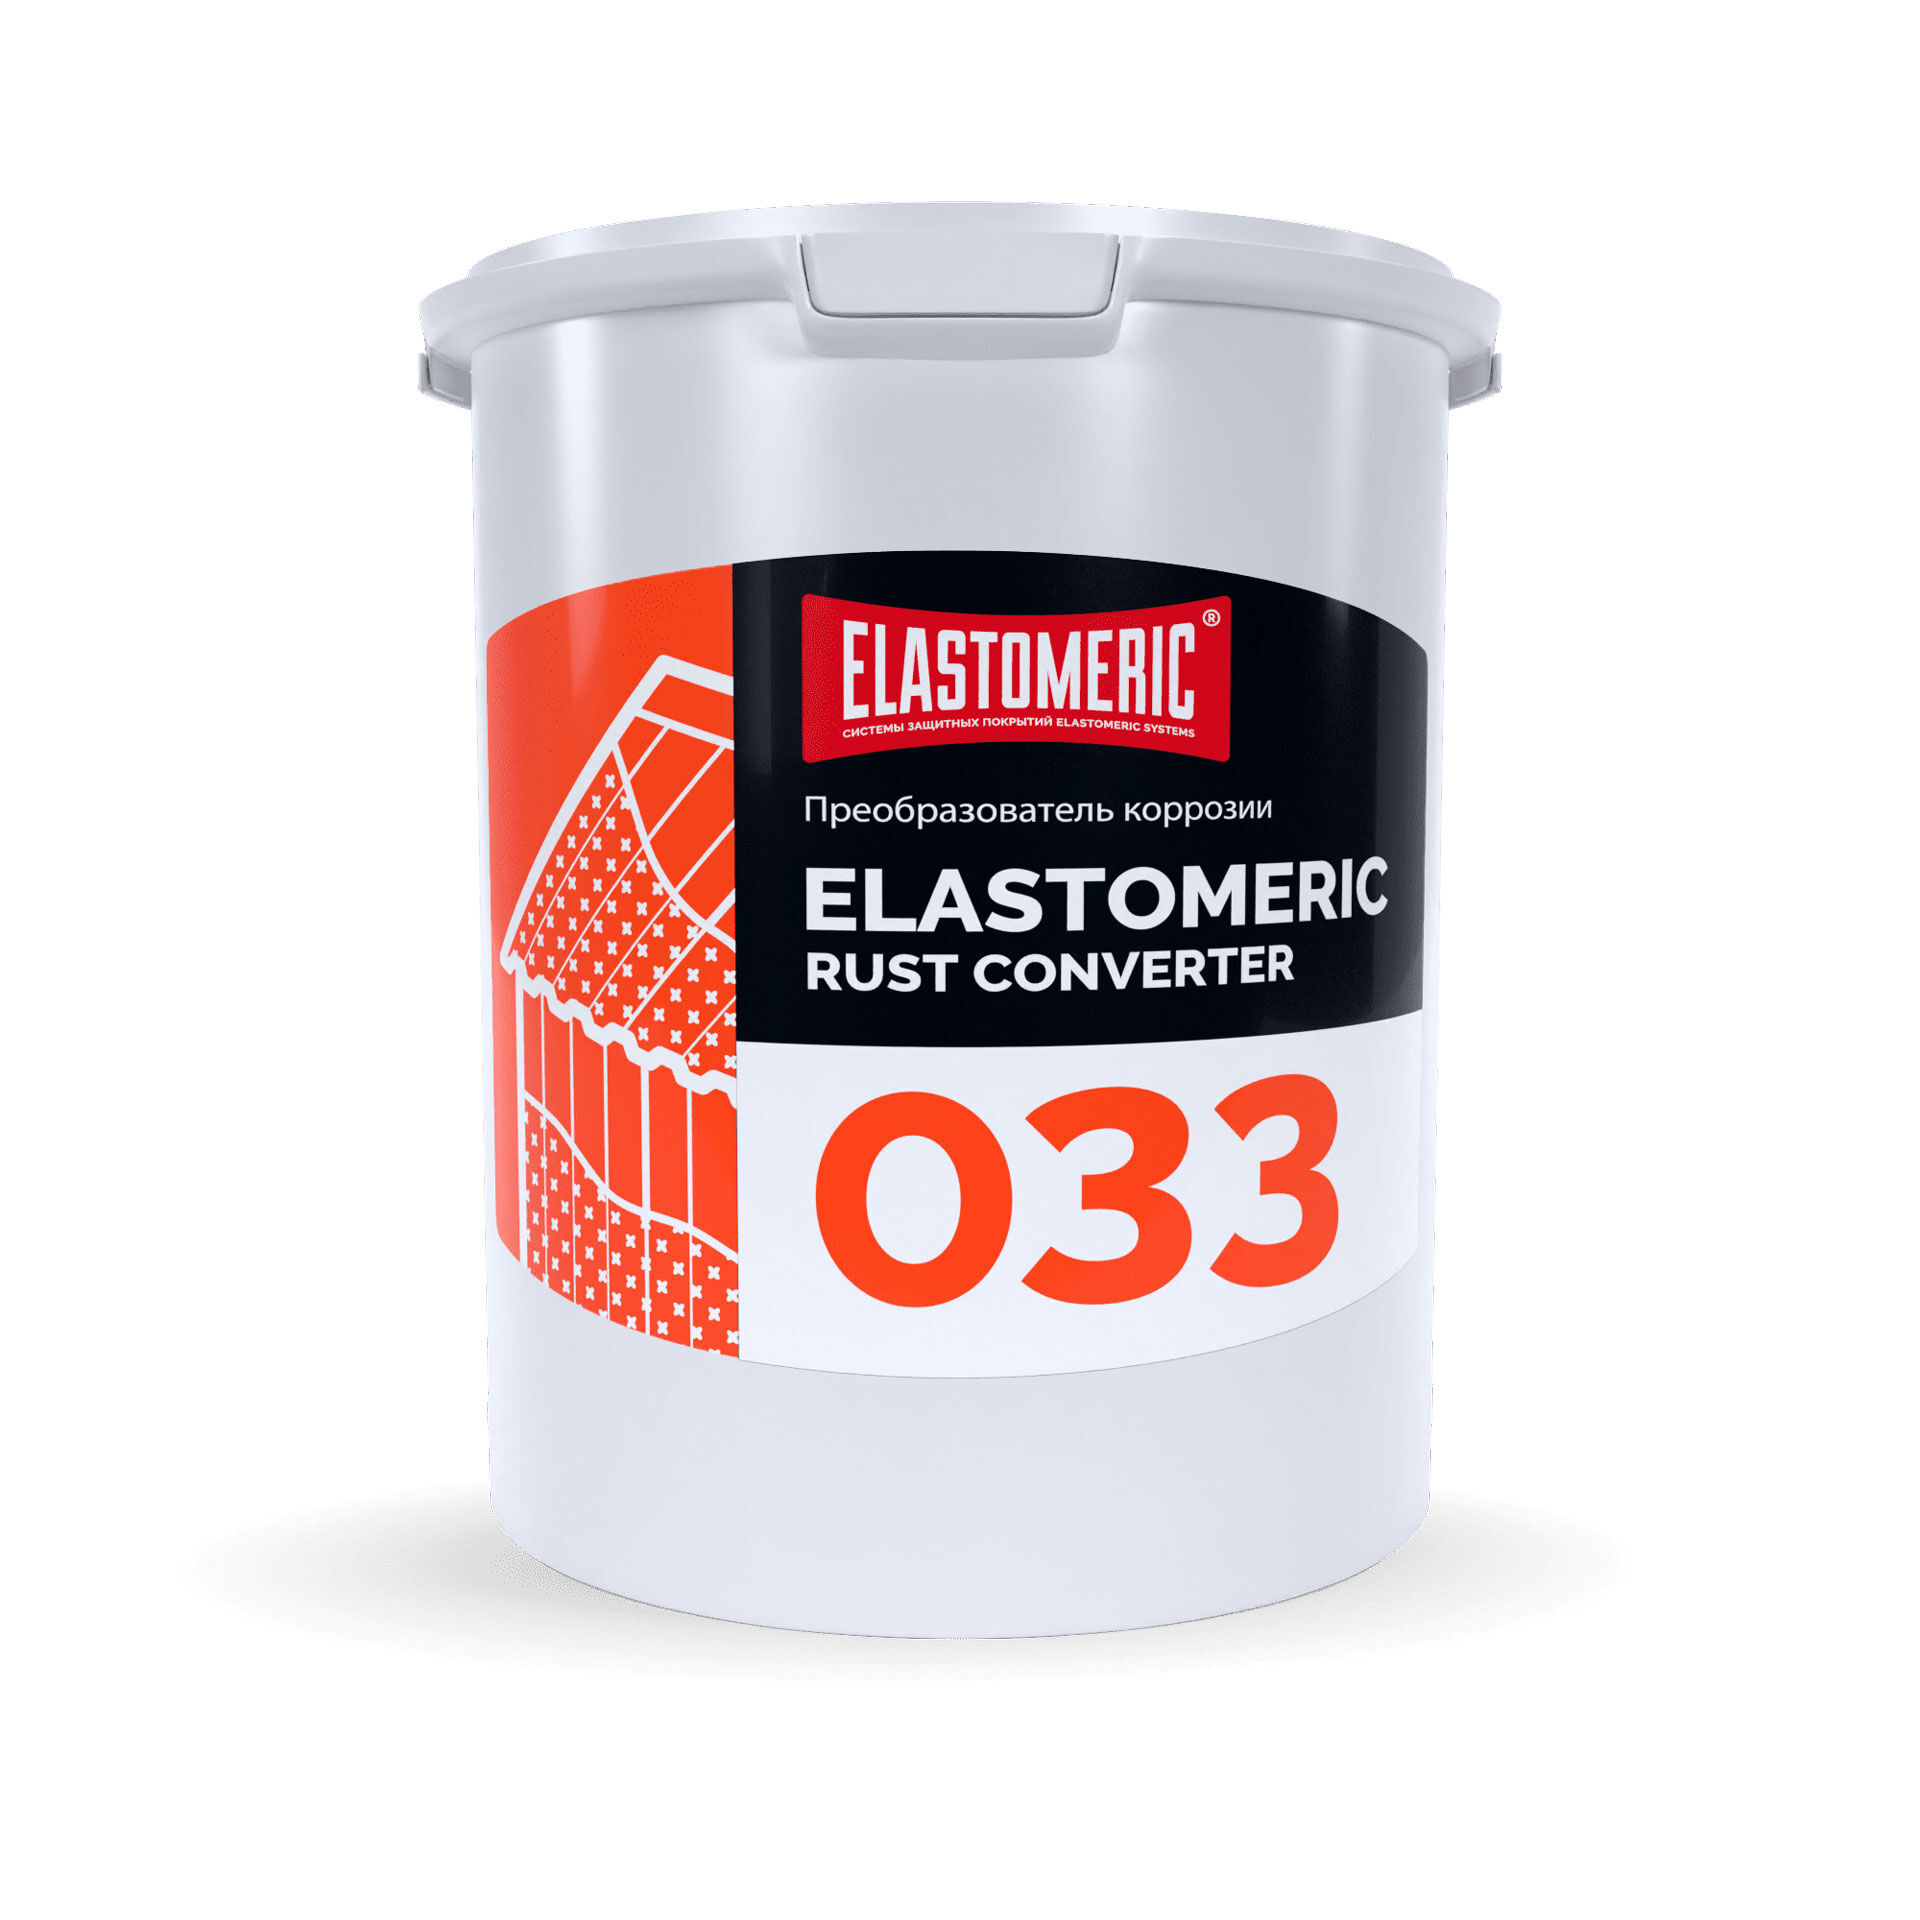 Преобразователь коррозии Elastomeric 033 Rust Converter